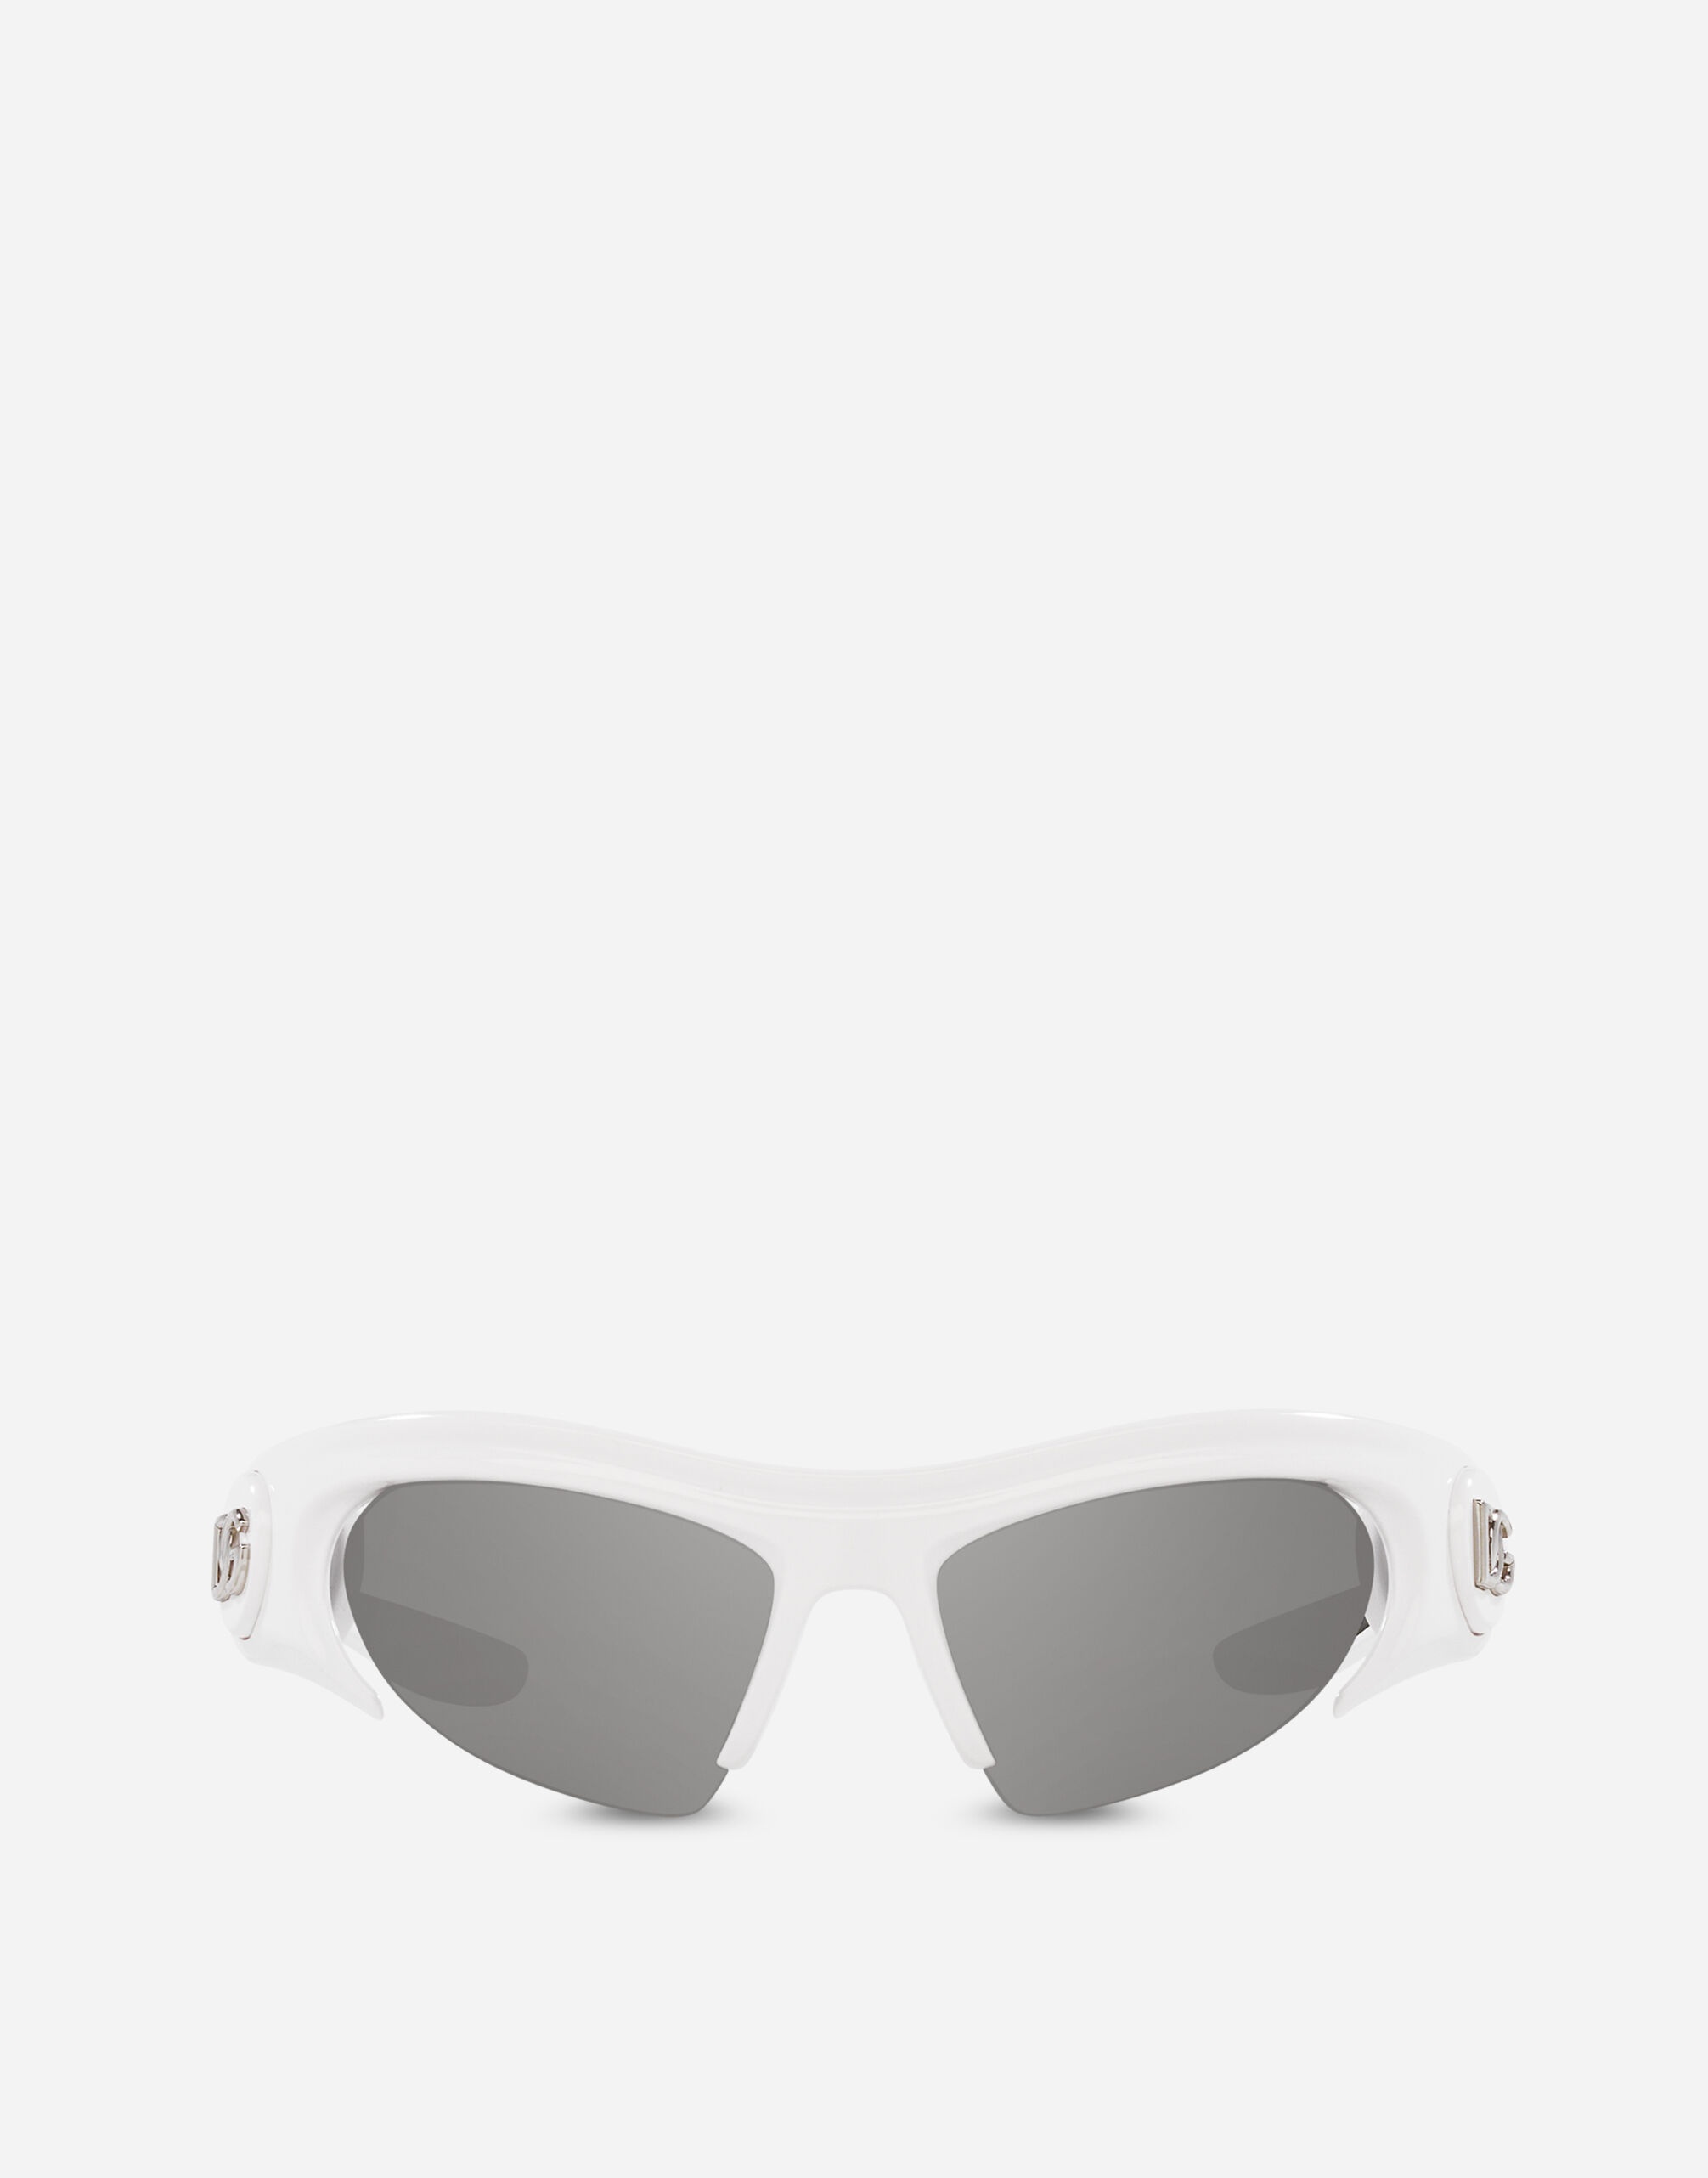 DG Toy sunglasses - 1